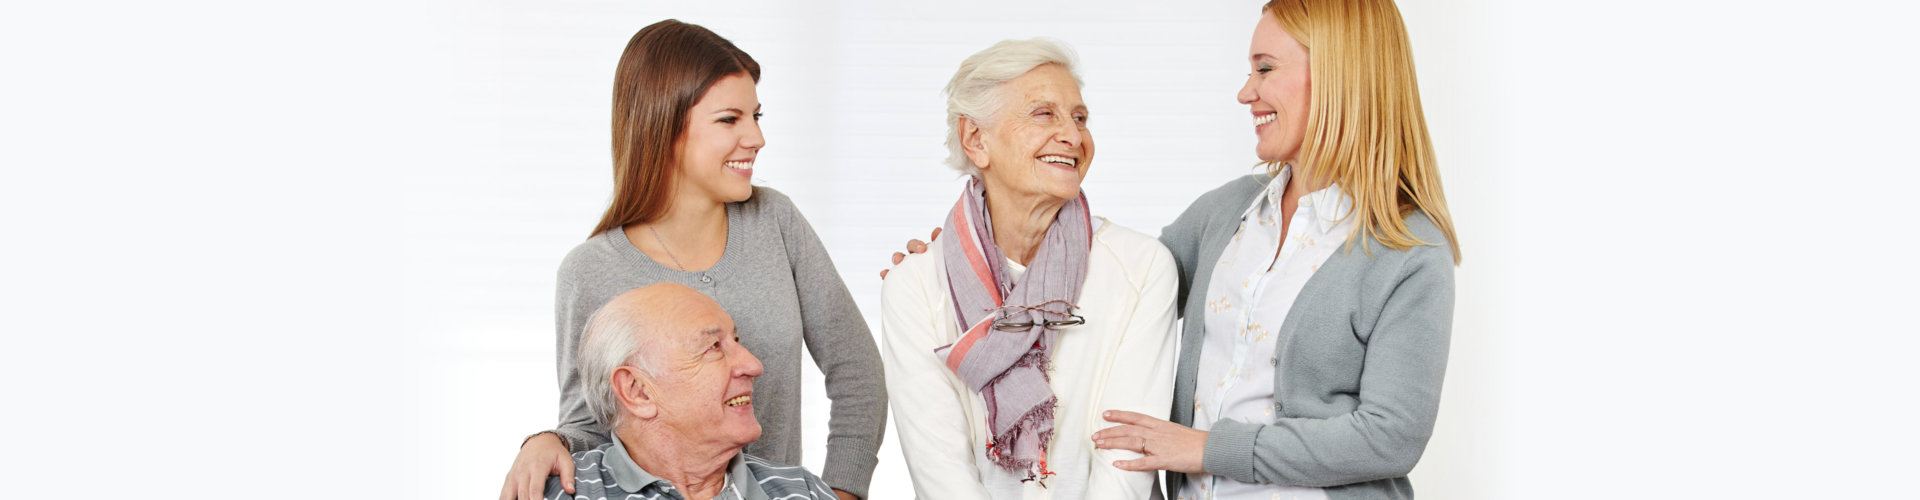 caregivers smiling with seniors